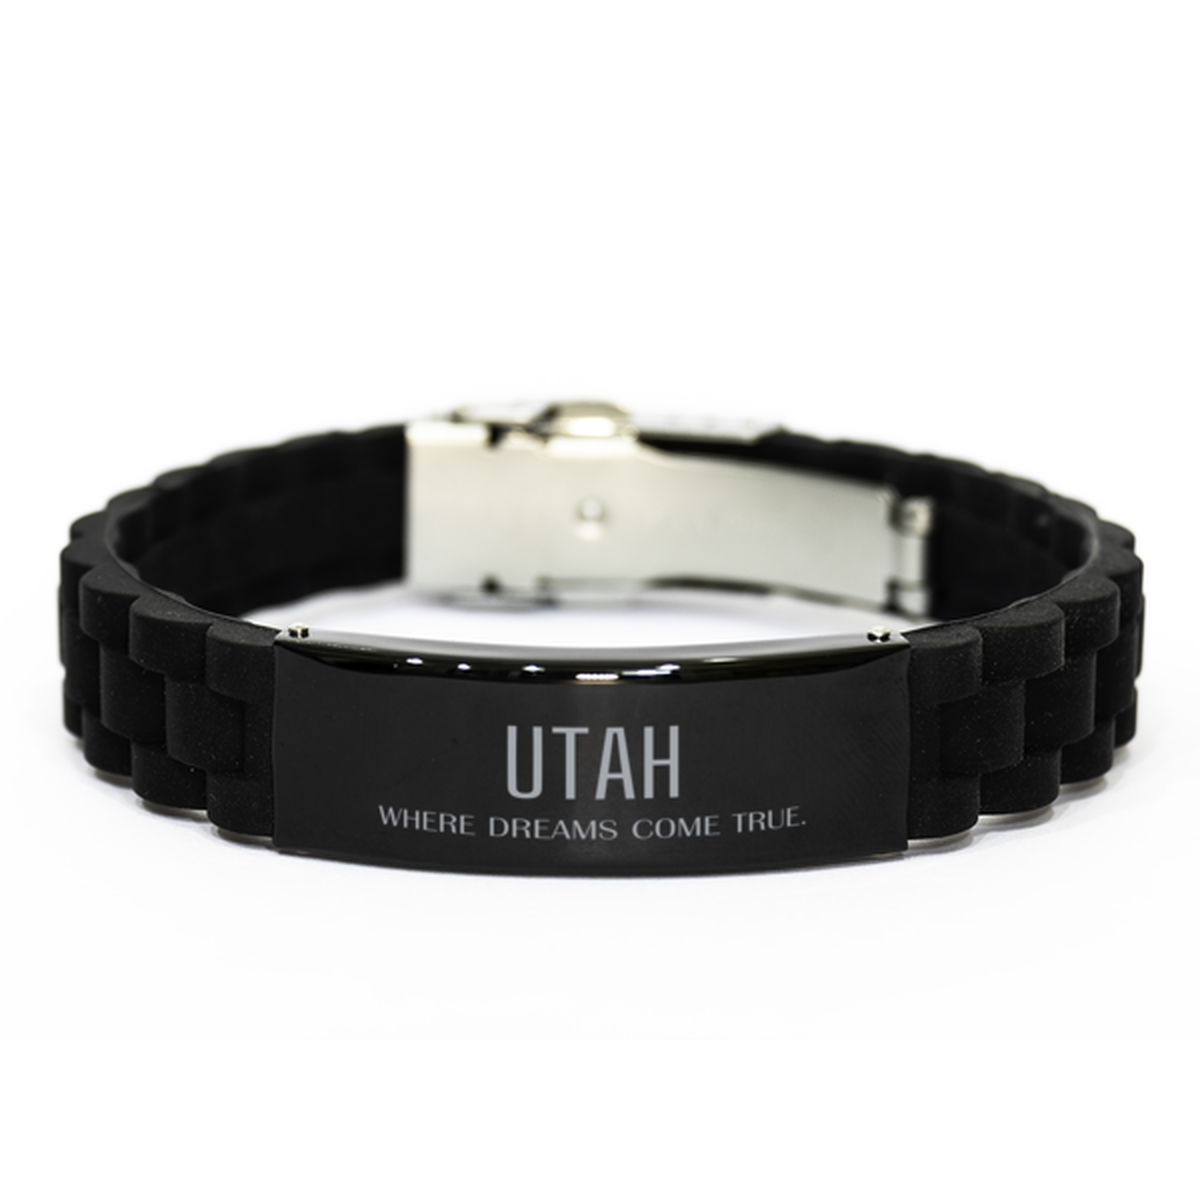 Love Utah State Black Glidelock Clasp Bracelet, Utah Where dreams come true, Birthday Inspirational Gifts For Utah Men, Women, Friends